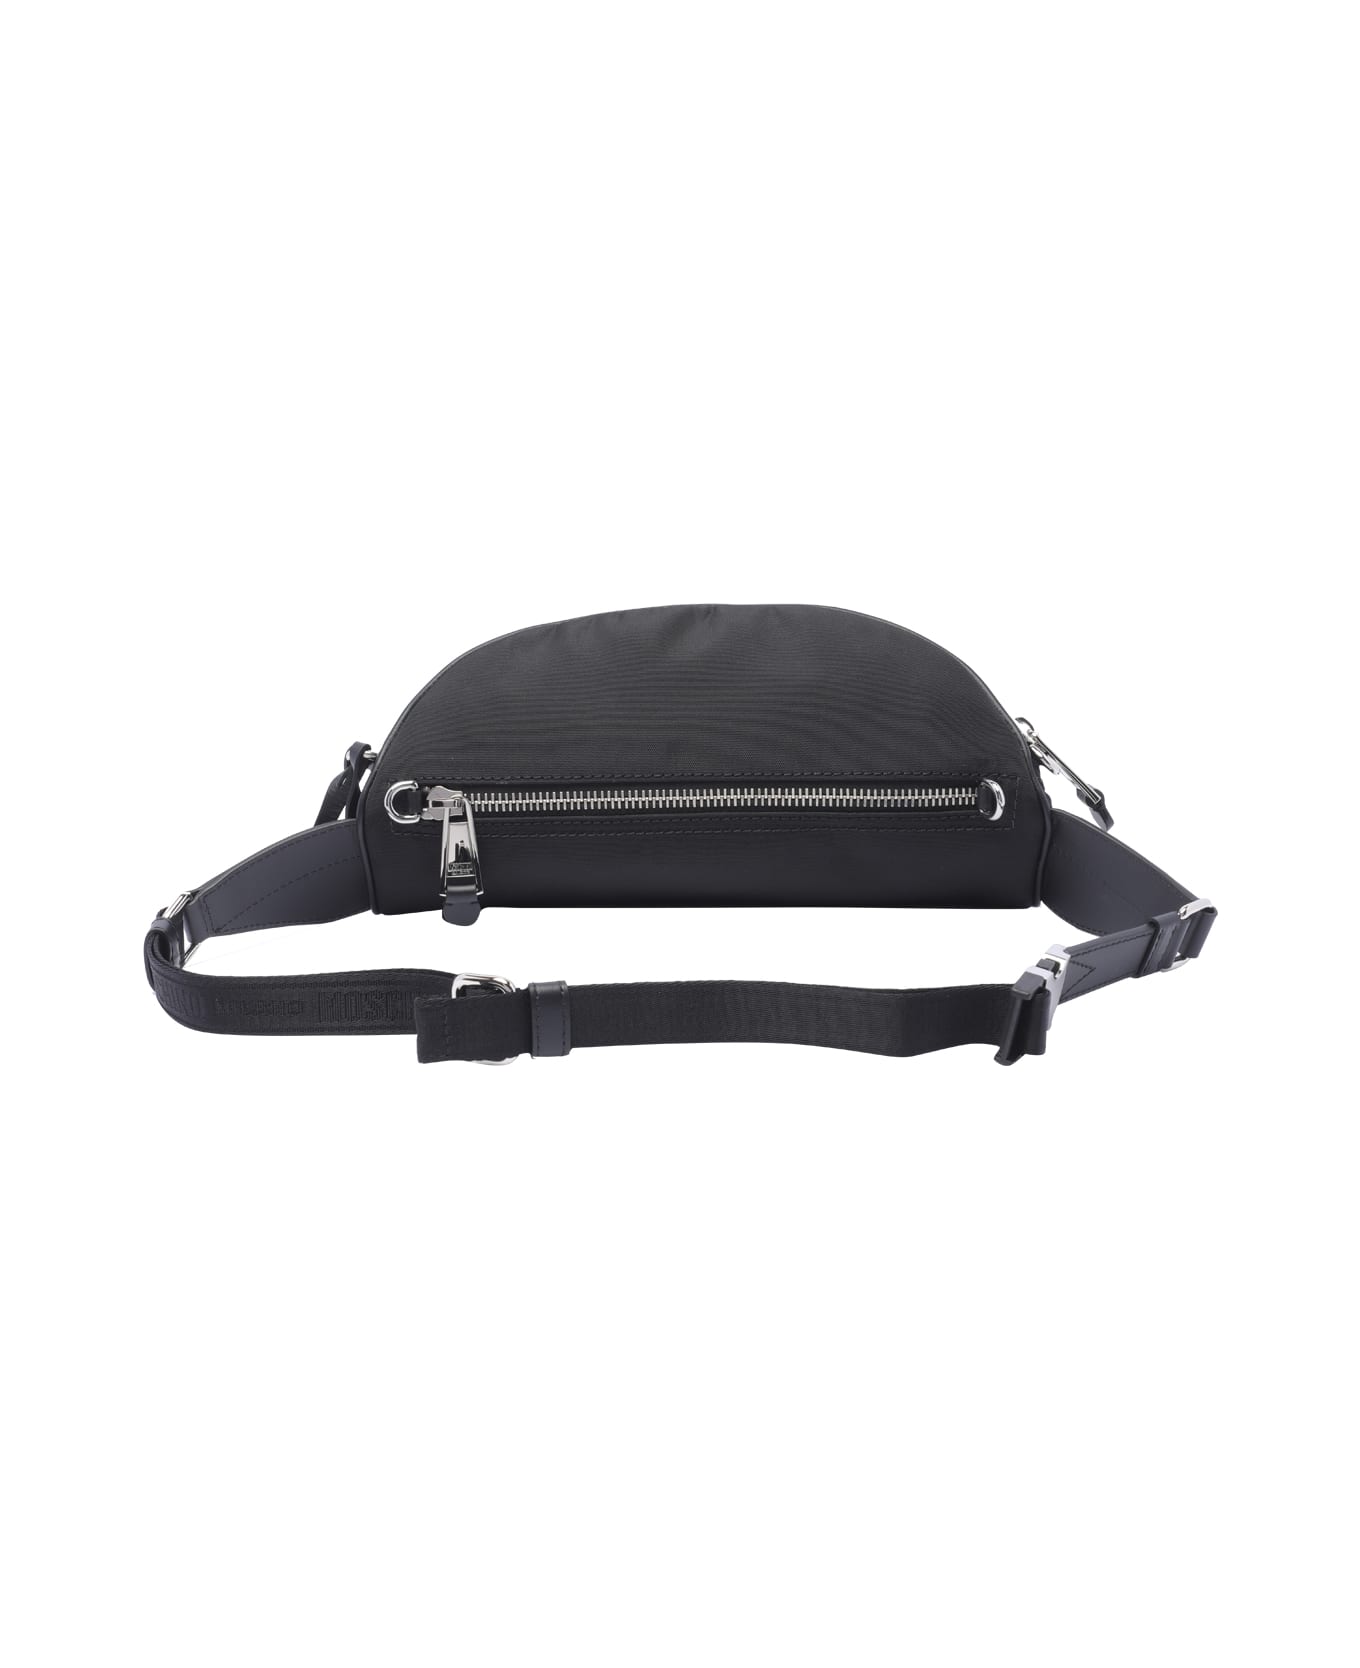 Moschino Couture Belt Bag - Black